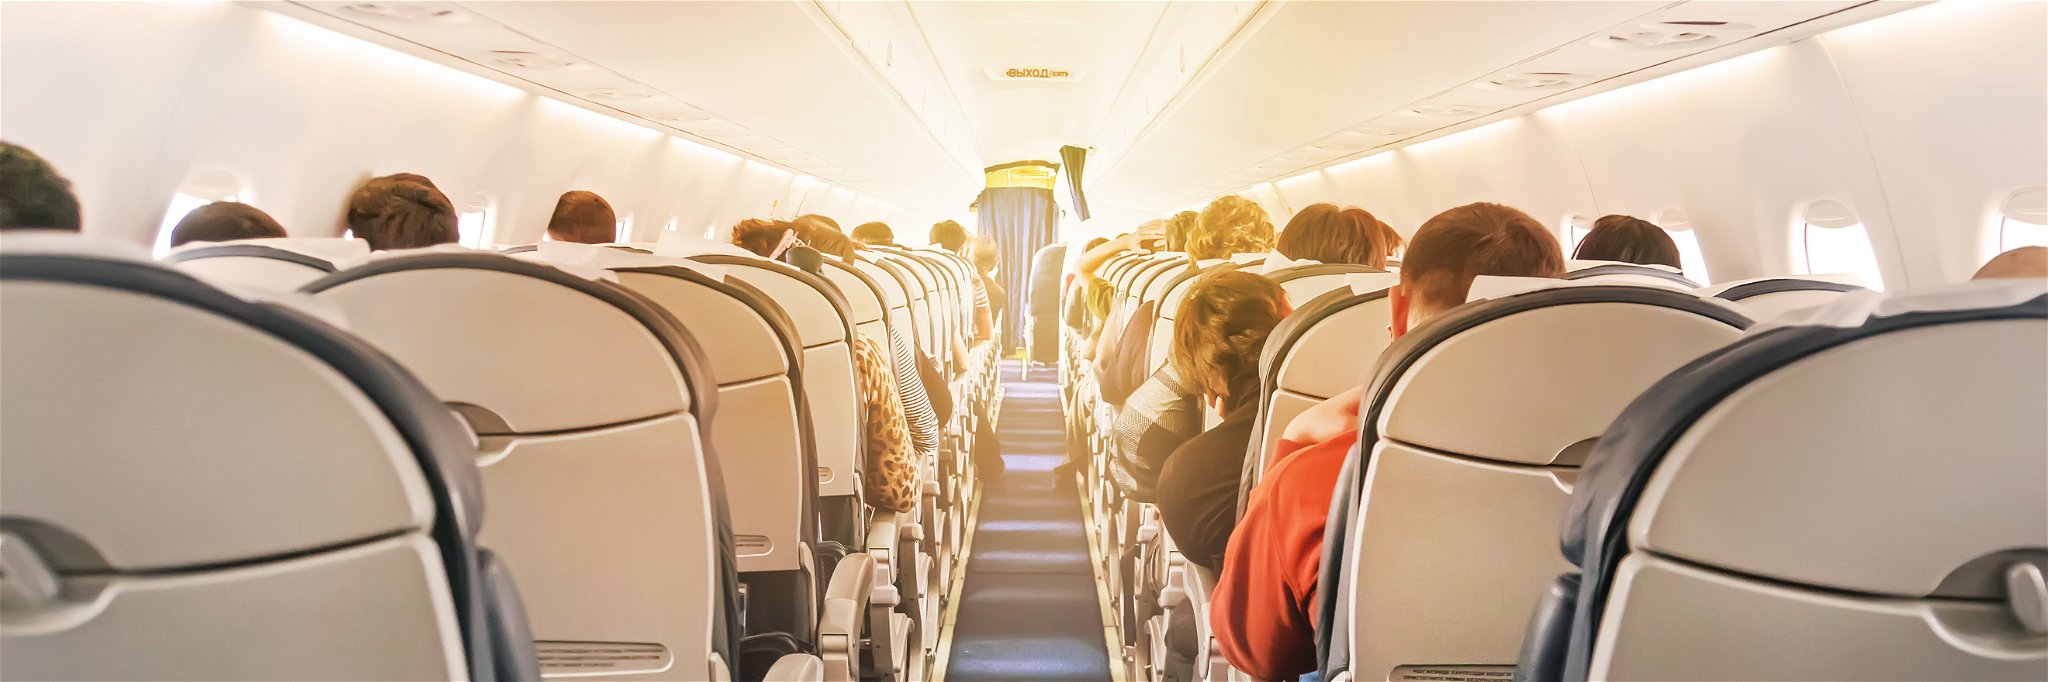 Unruly Behaviour Soars Among US Plane Passengers